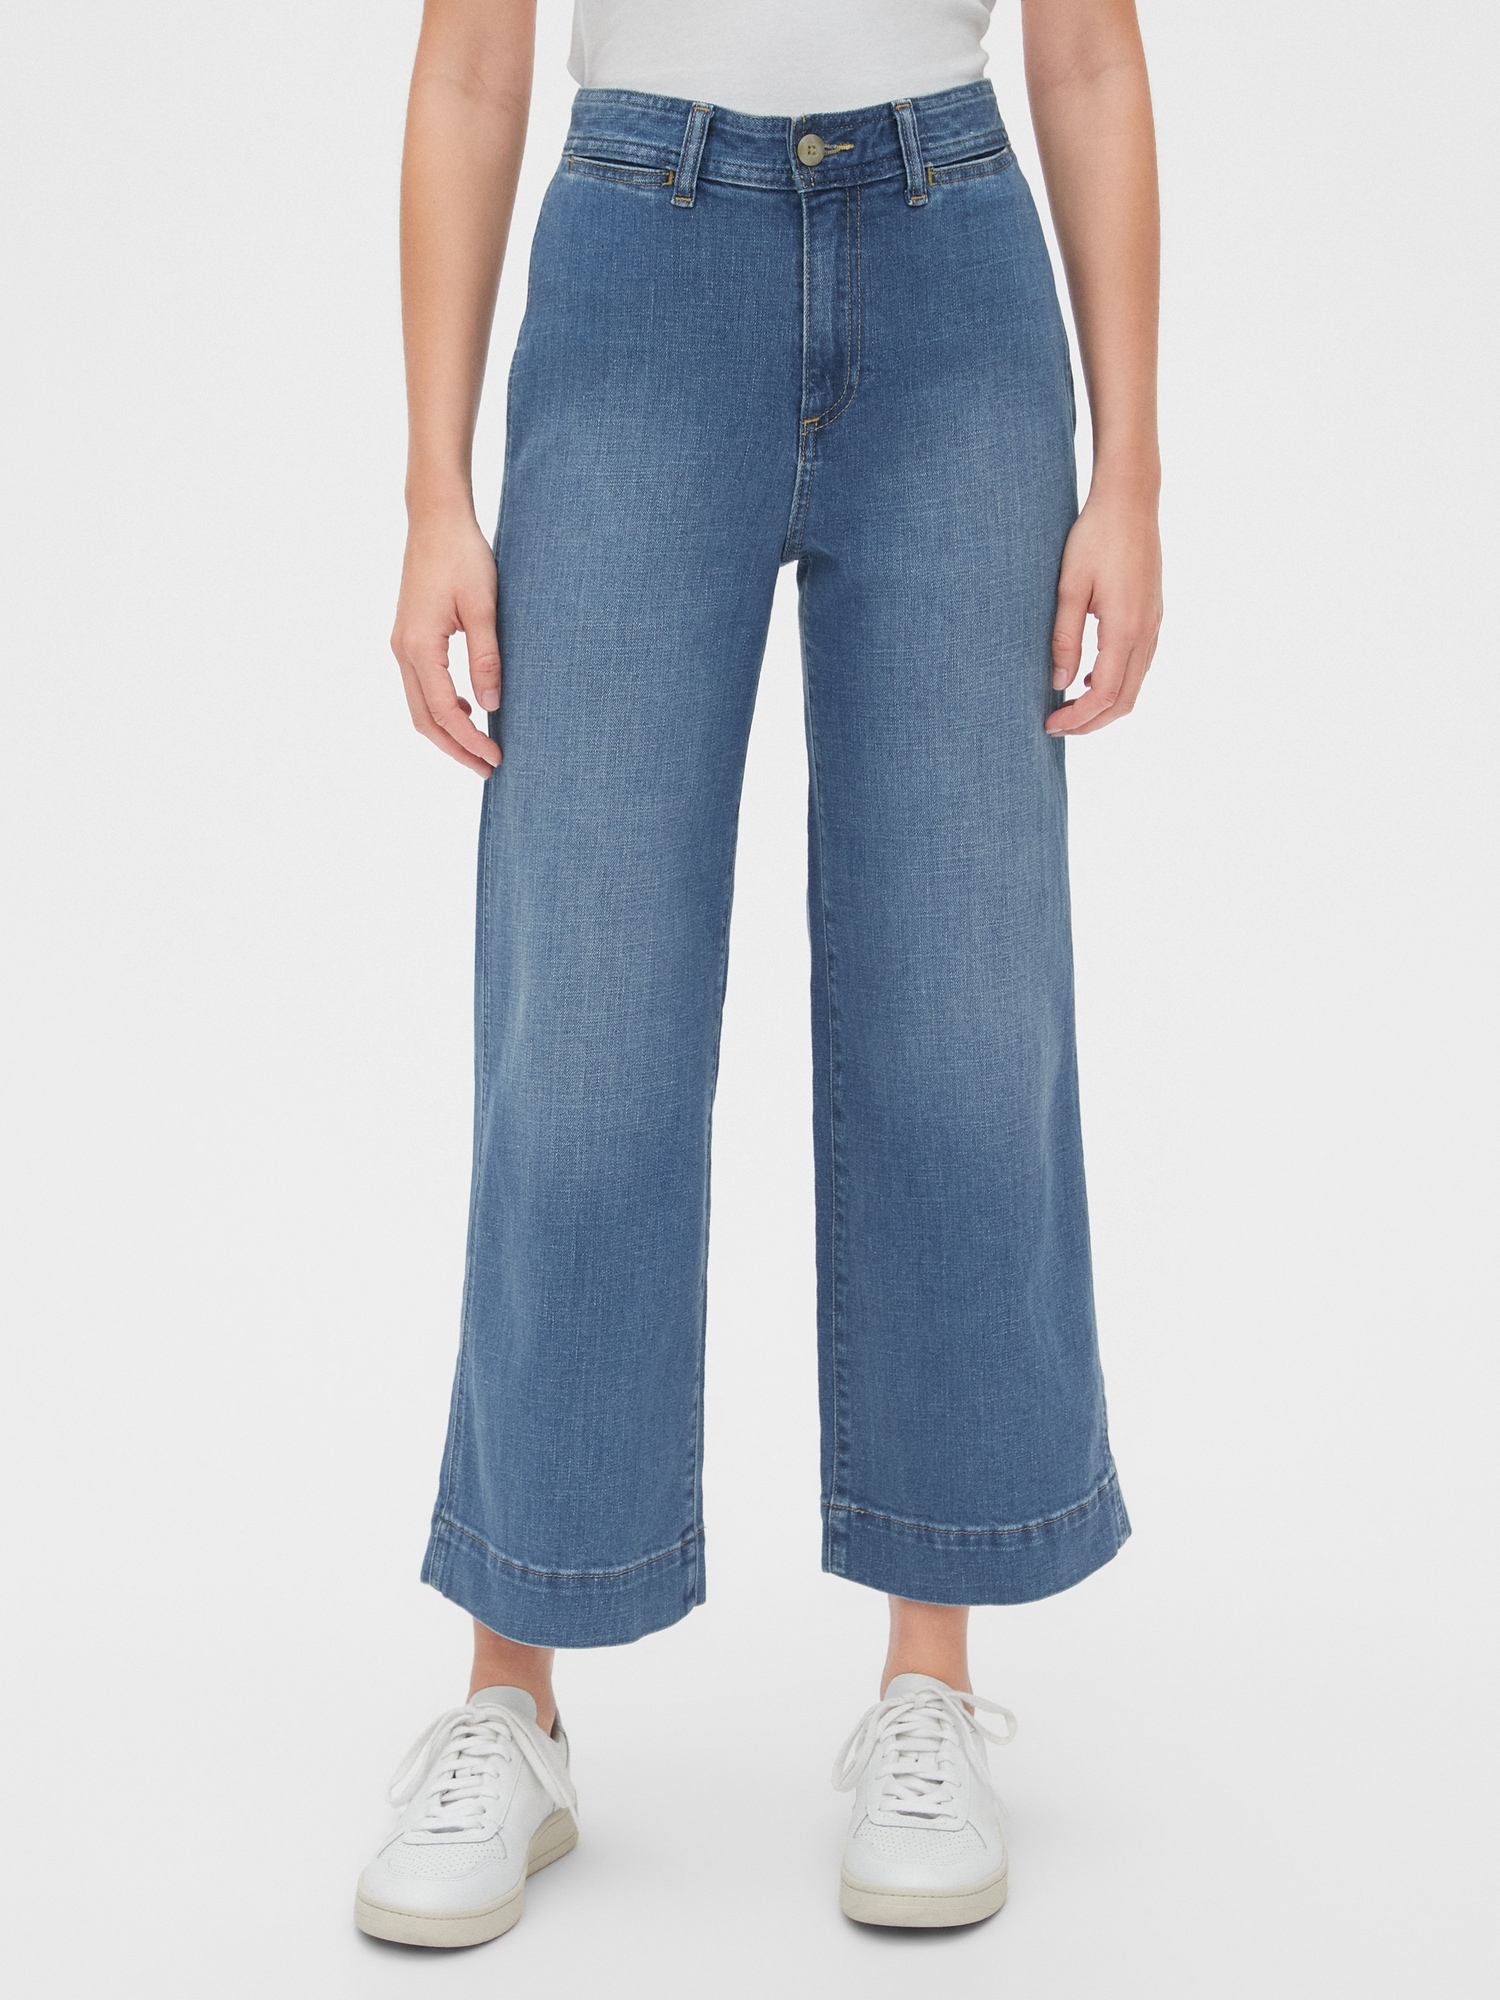 women's straight leg khaki jeans